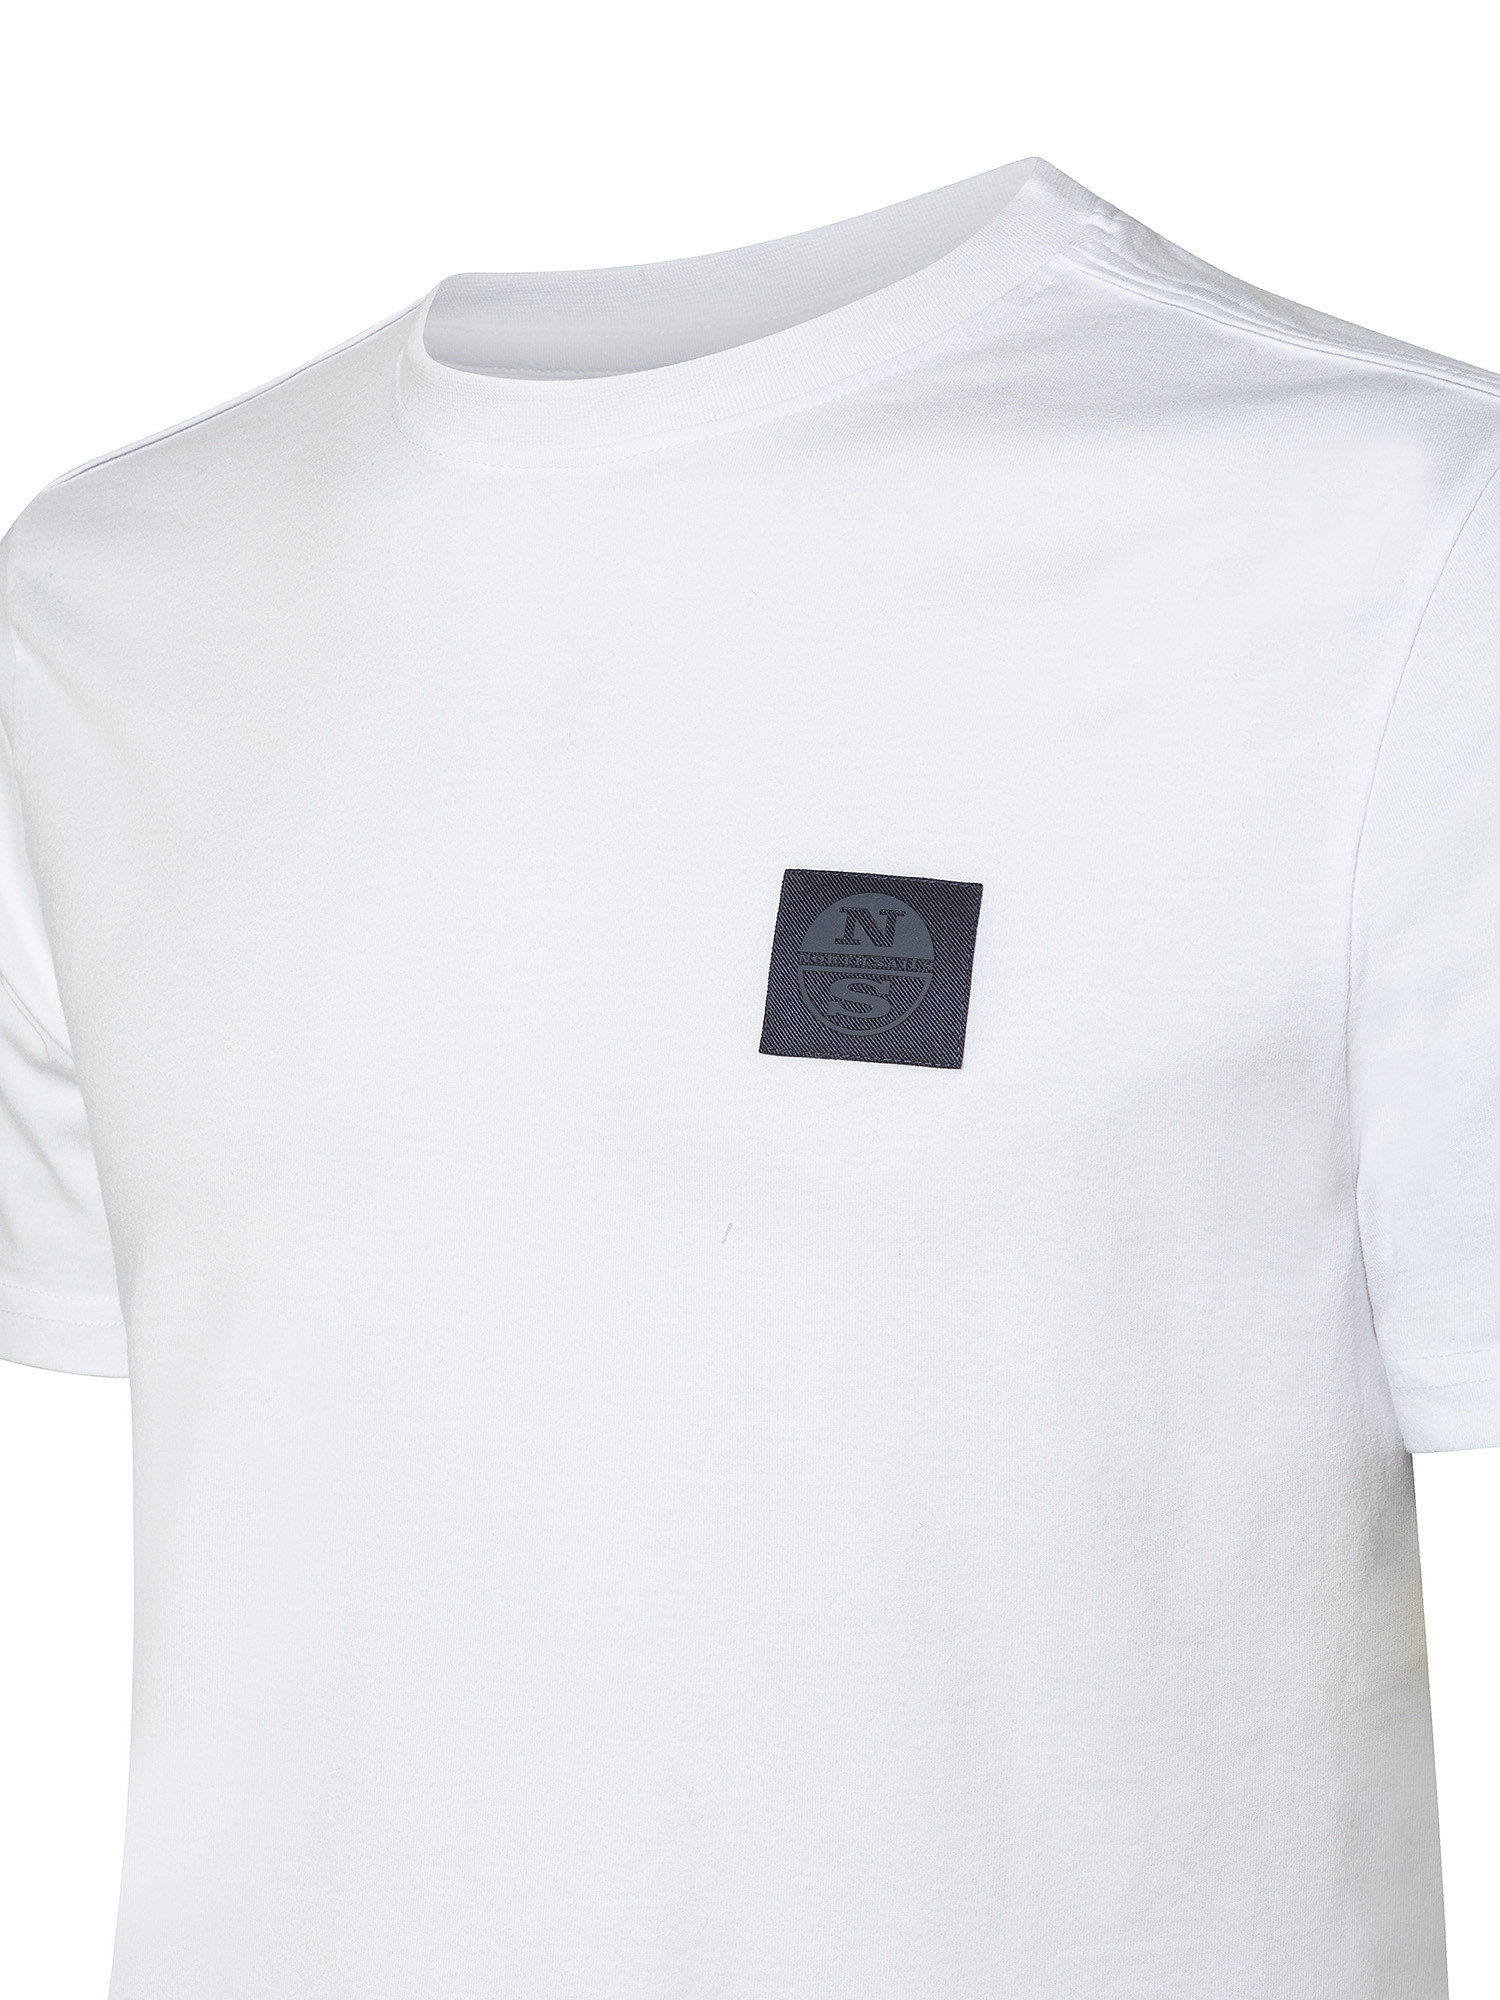 T-shirt manica corta con logo, Bianco, large image number 2